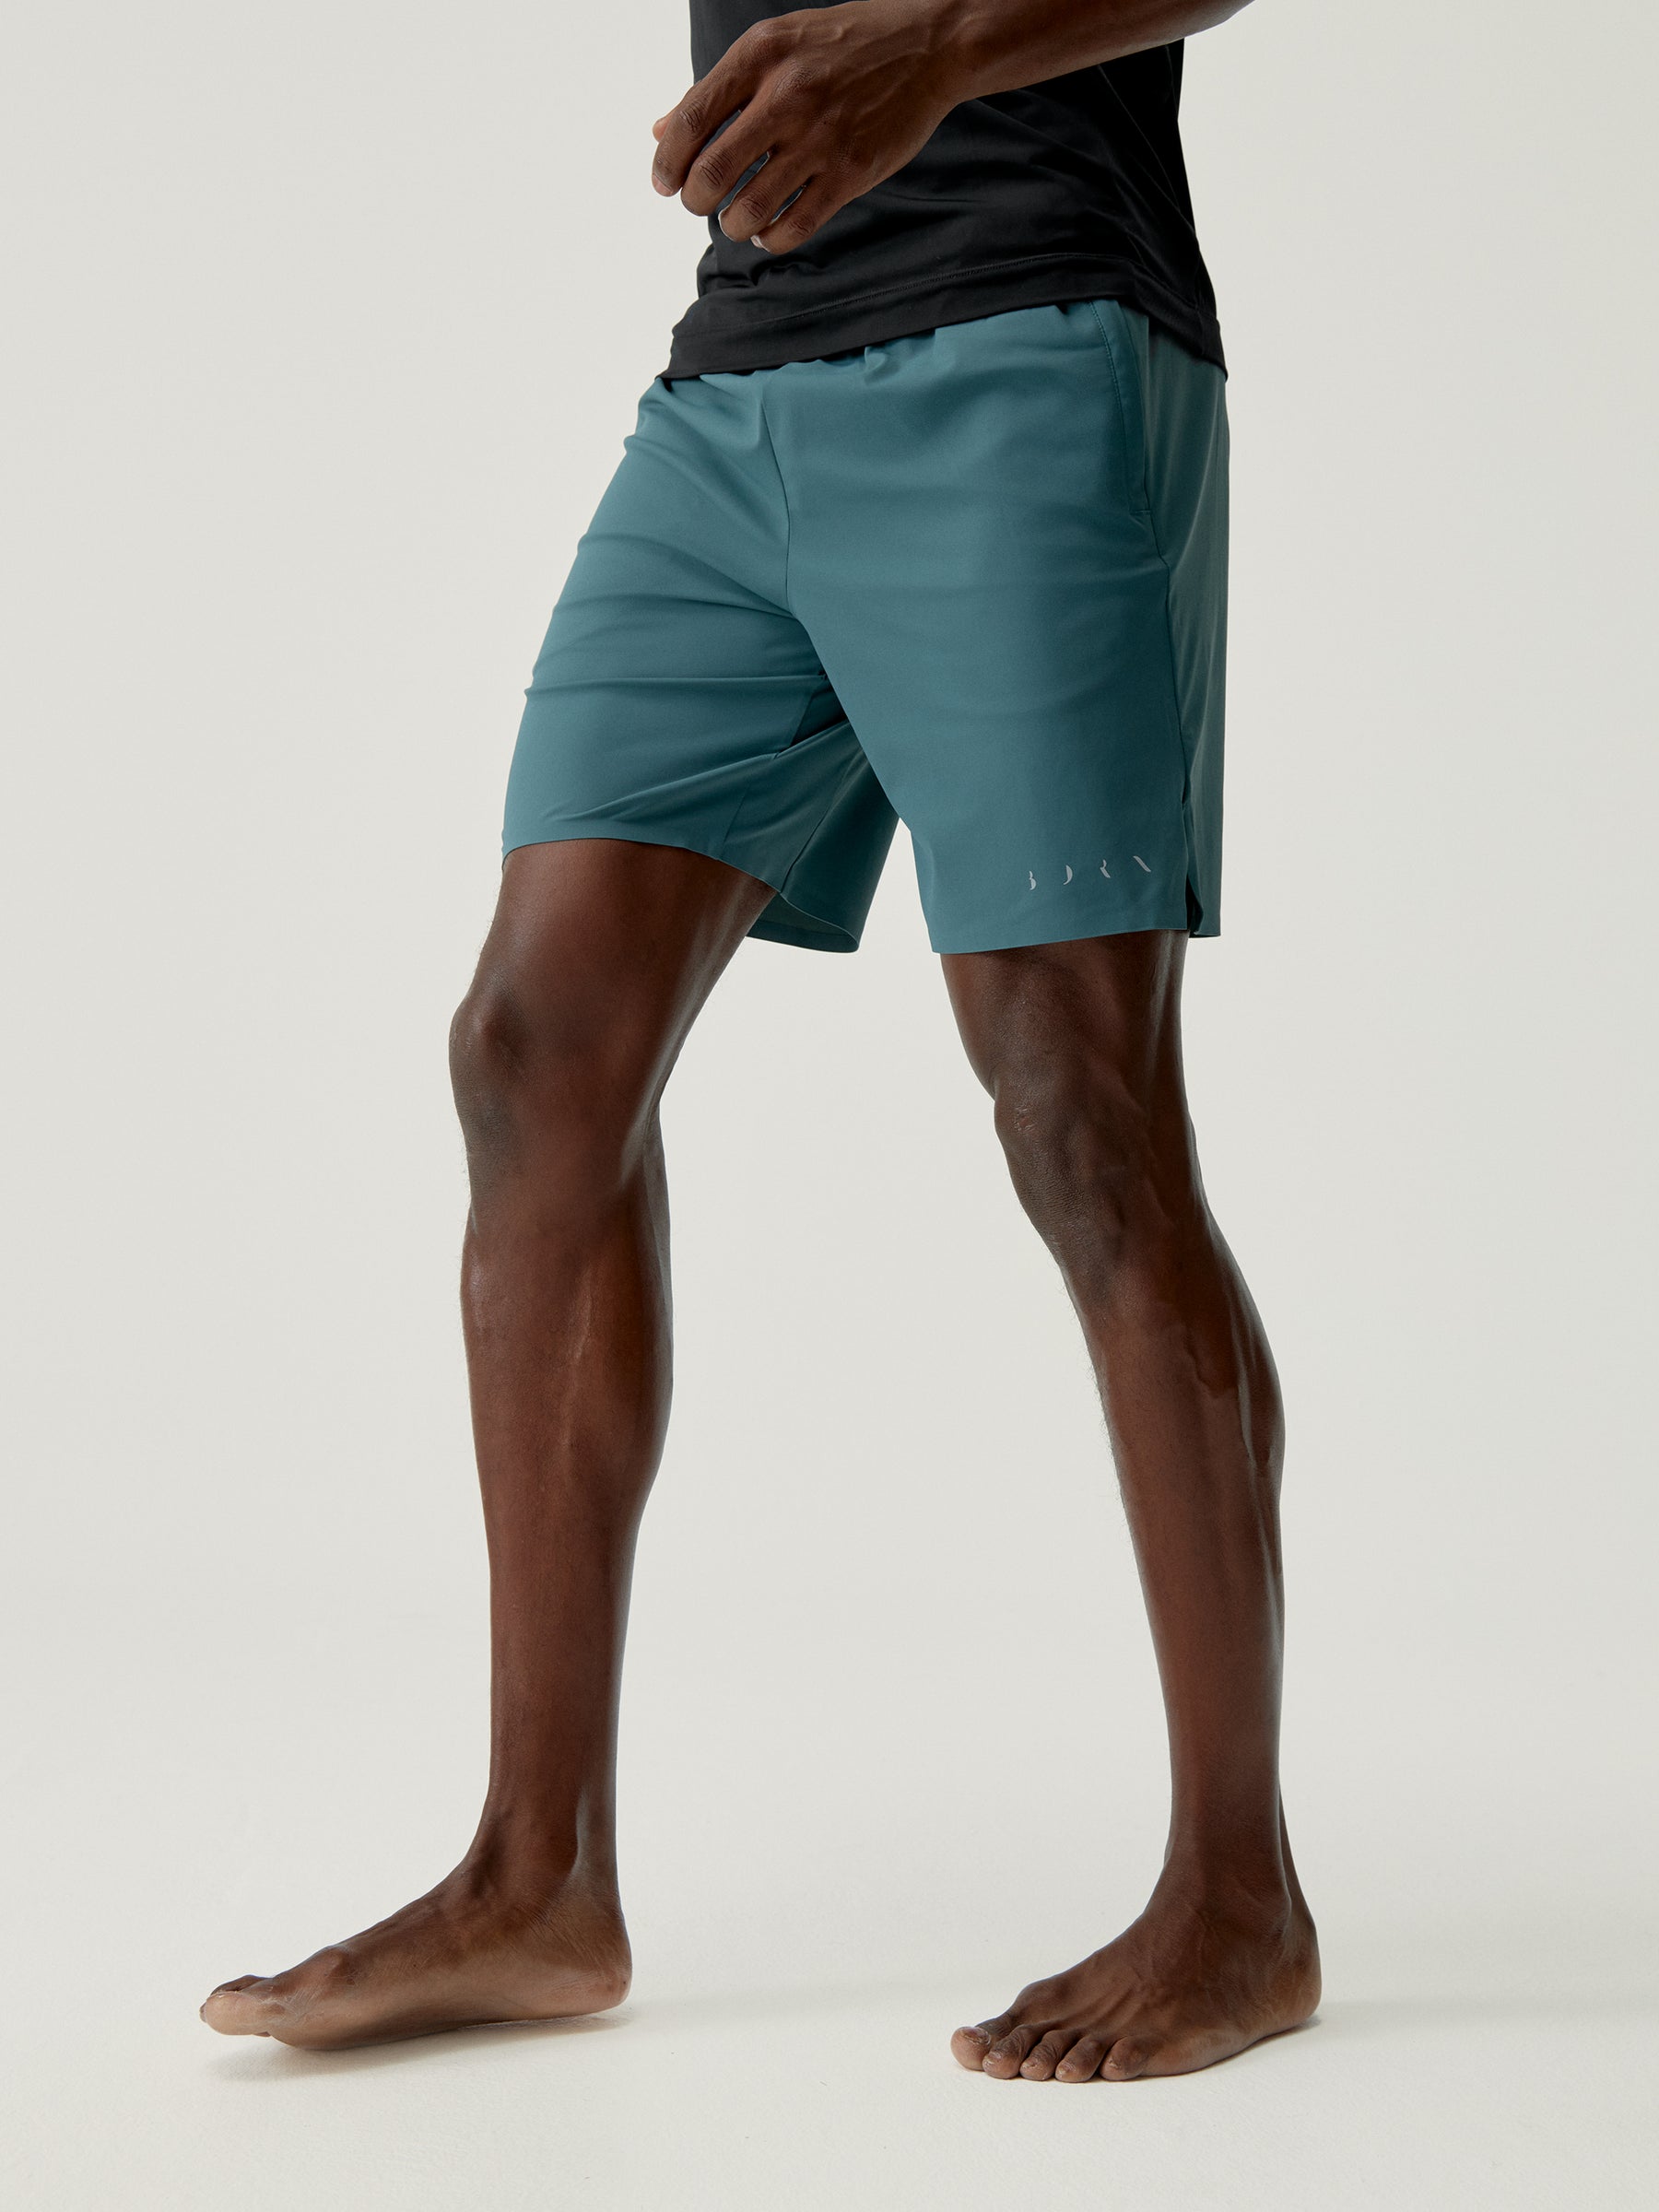 Orinoco Shorts in Grey Green